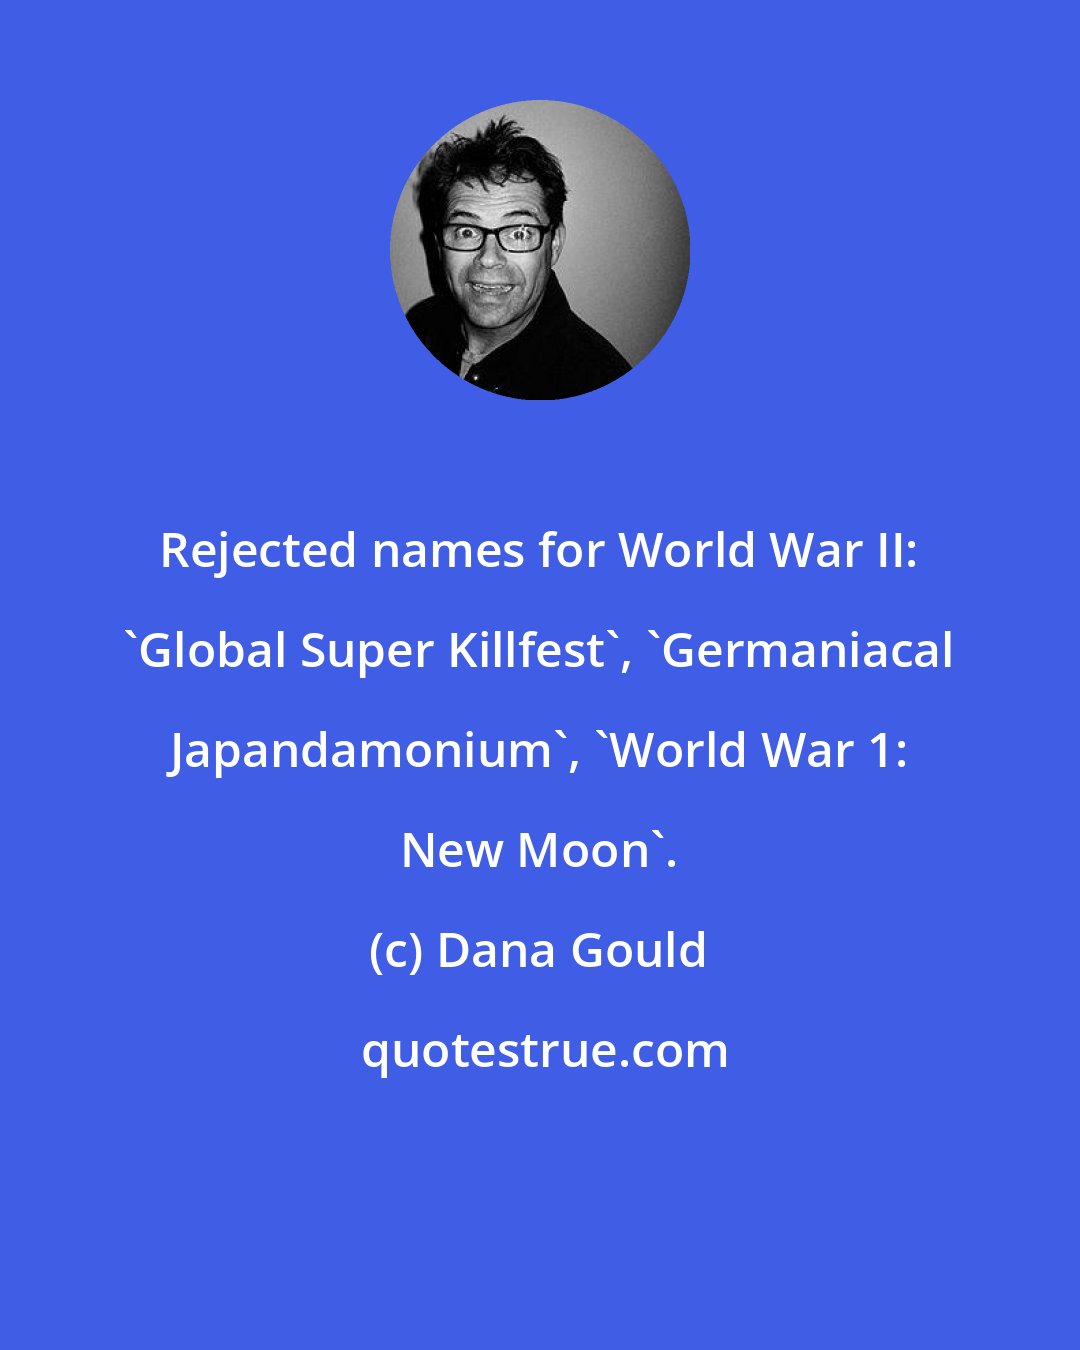 Dana Gould: Rejected names for World War II: 'Global Super Killfest', 'Germaniacal Japandamonium', 'World War 1: New Moon'.